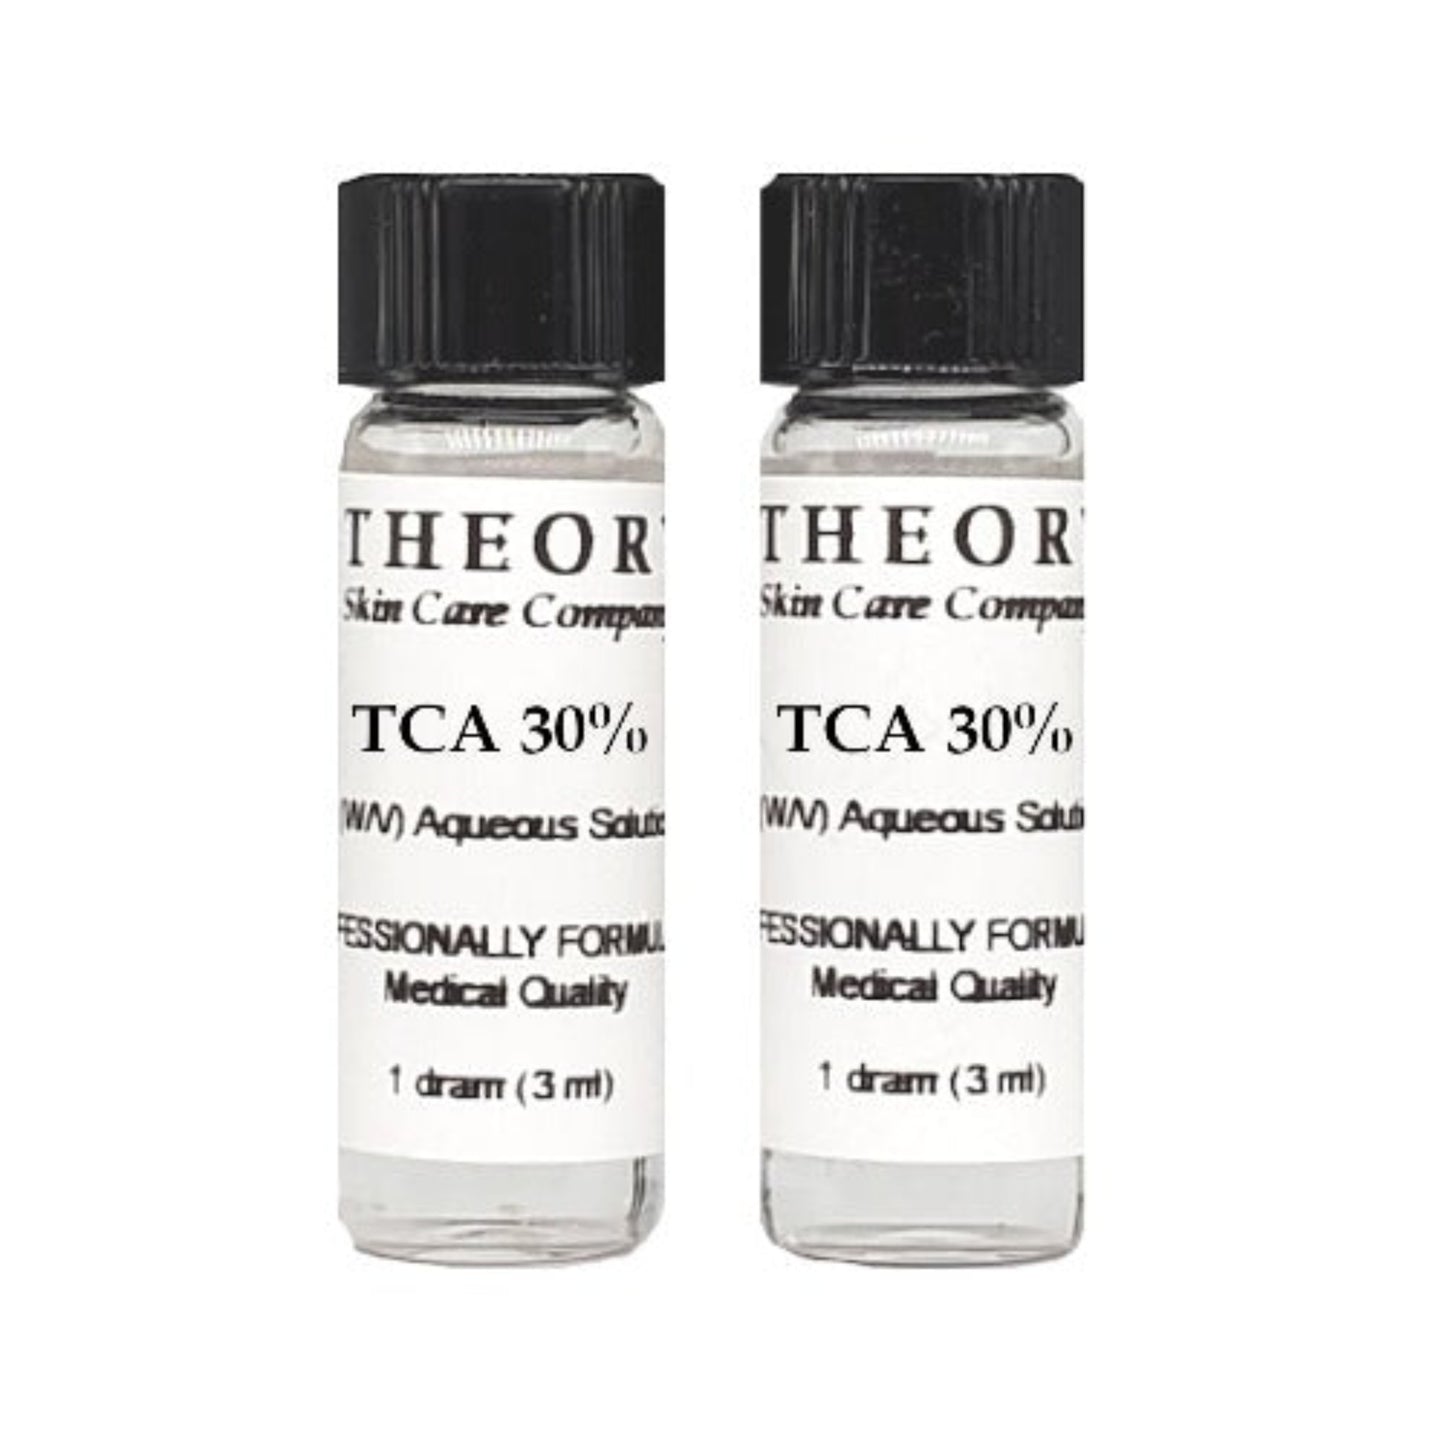 30% TCA, Trichloroacetic Acid | At Home Chemical Peel